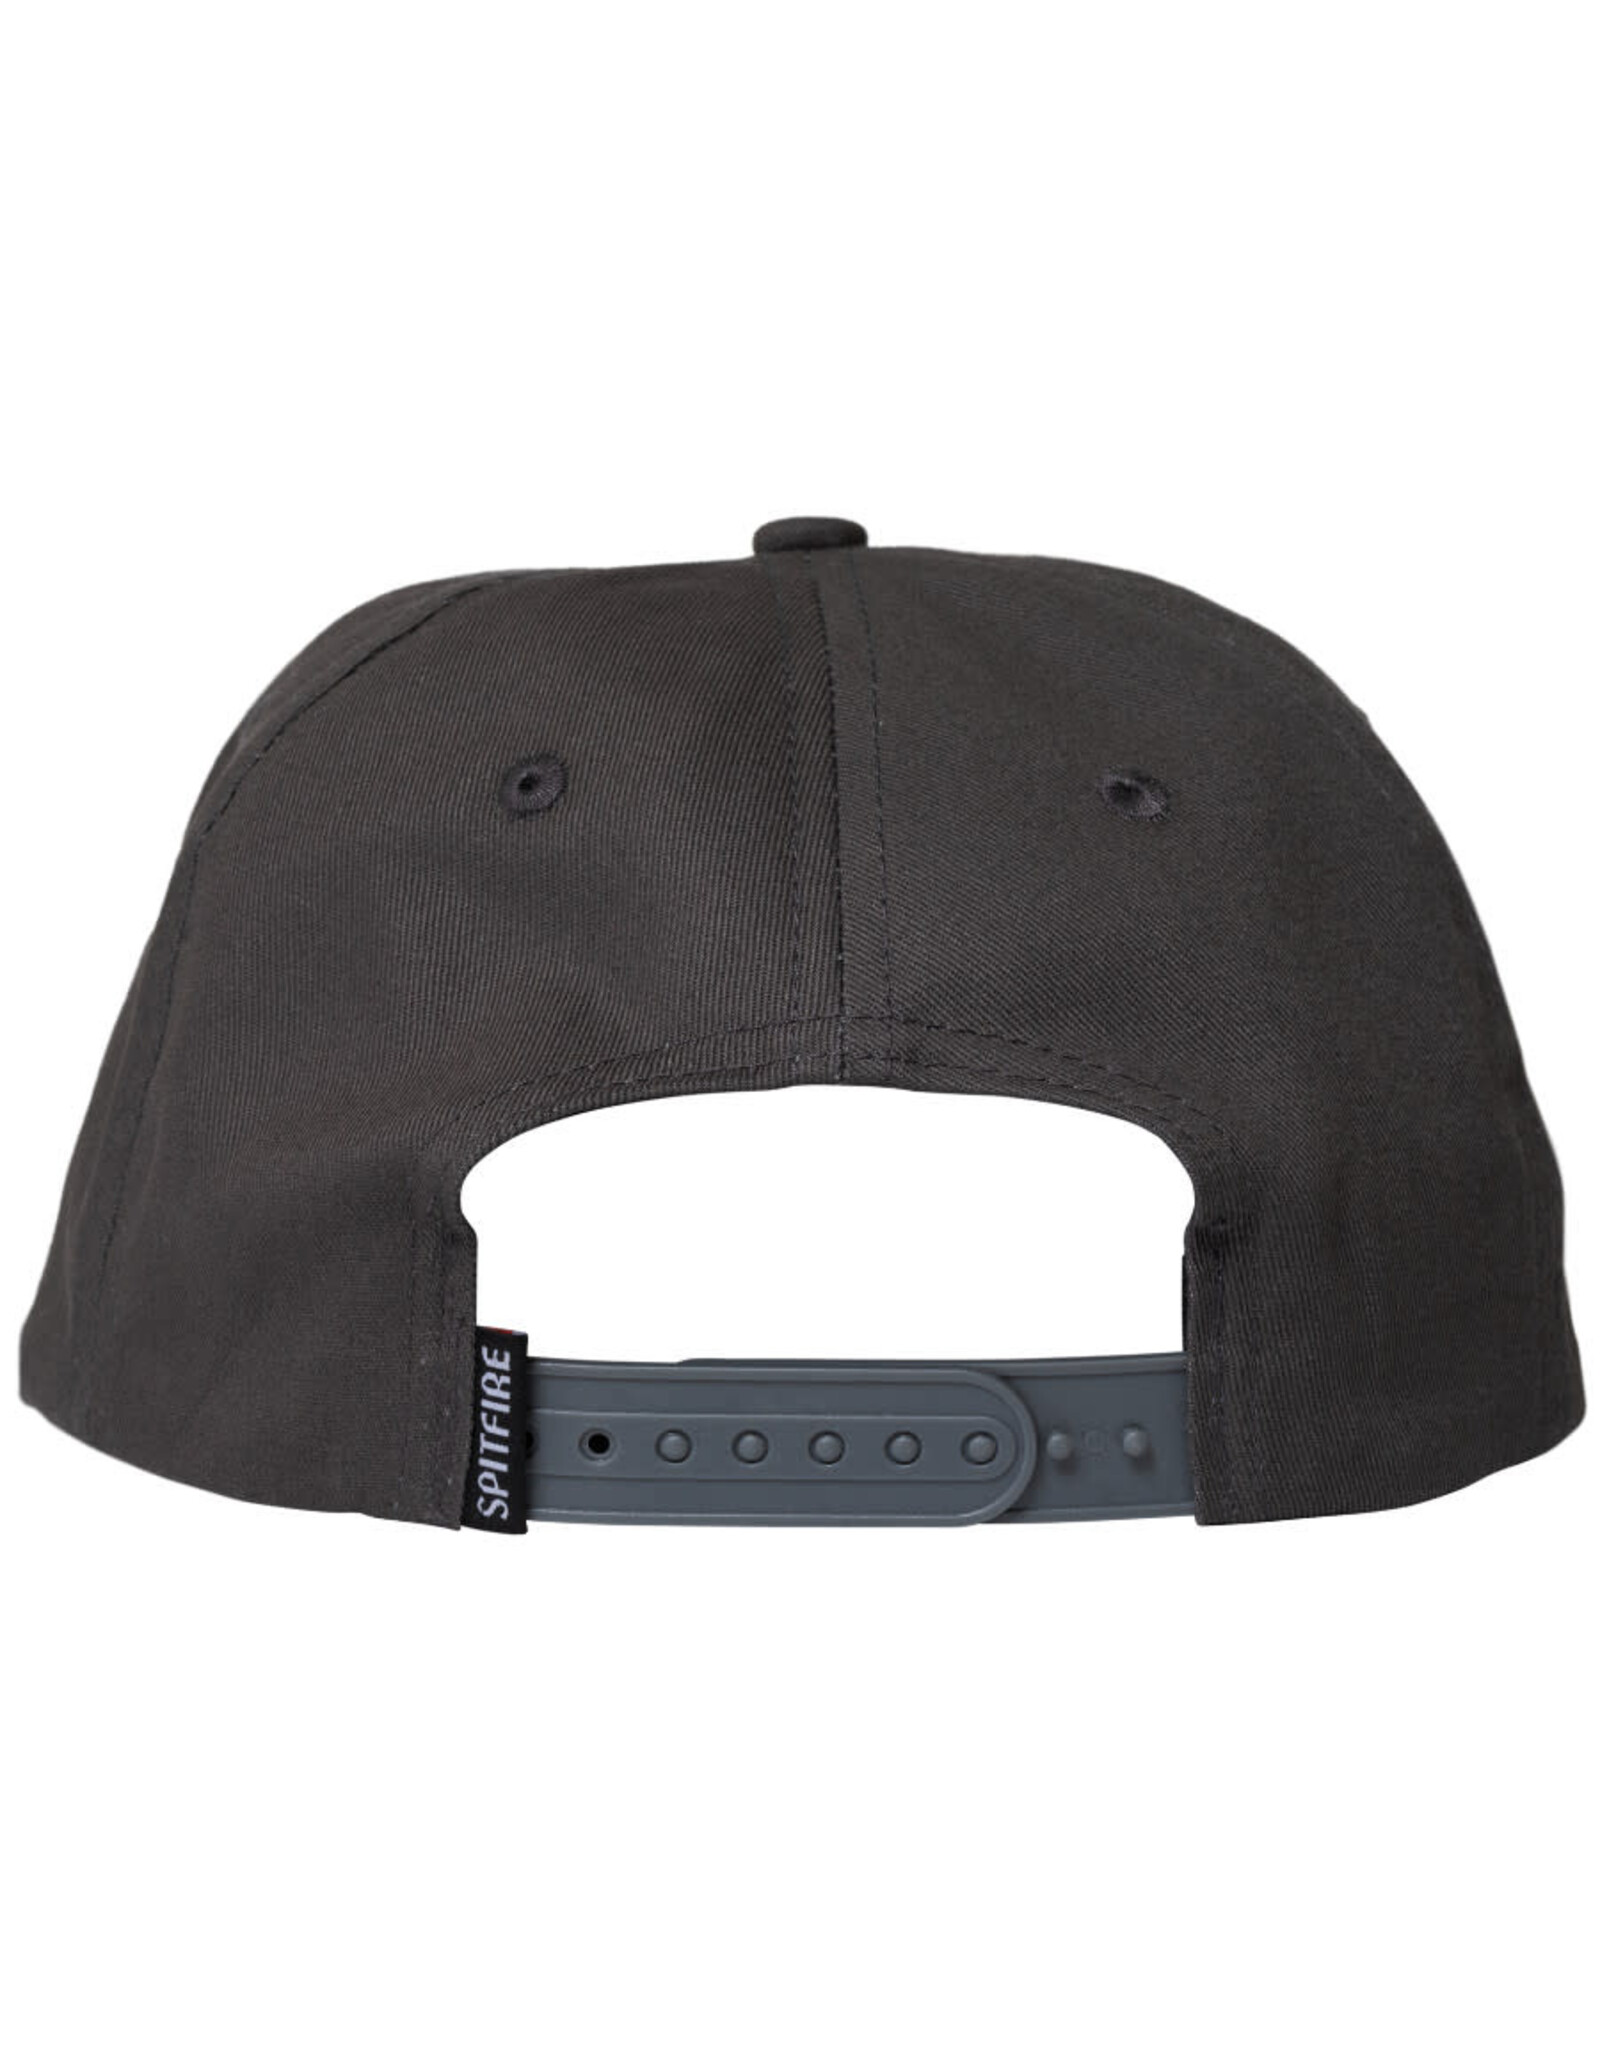 Spitfire Spitfire Hat Bighead Snapback (Charcoal/Black)